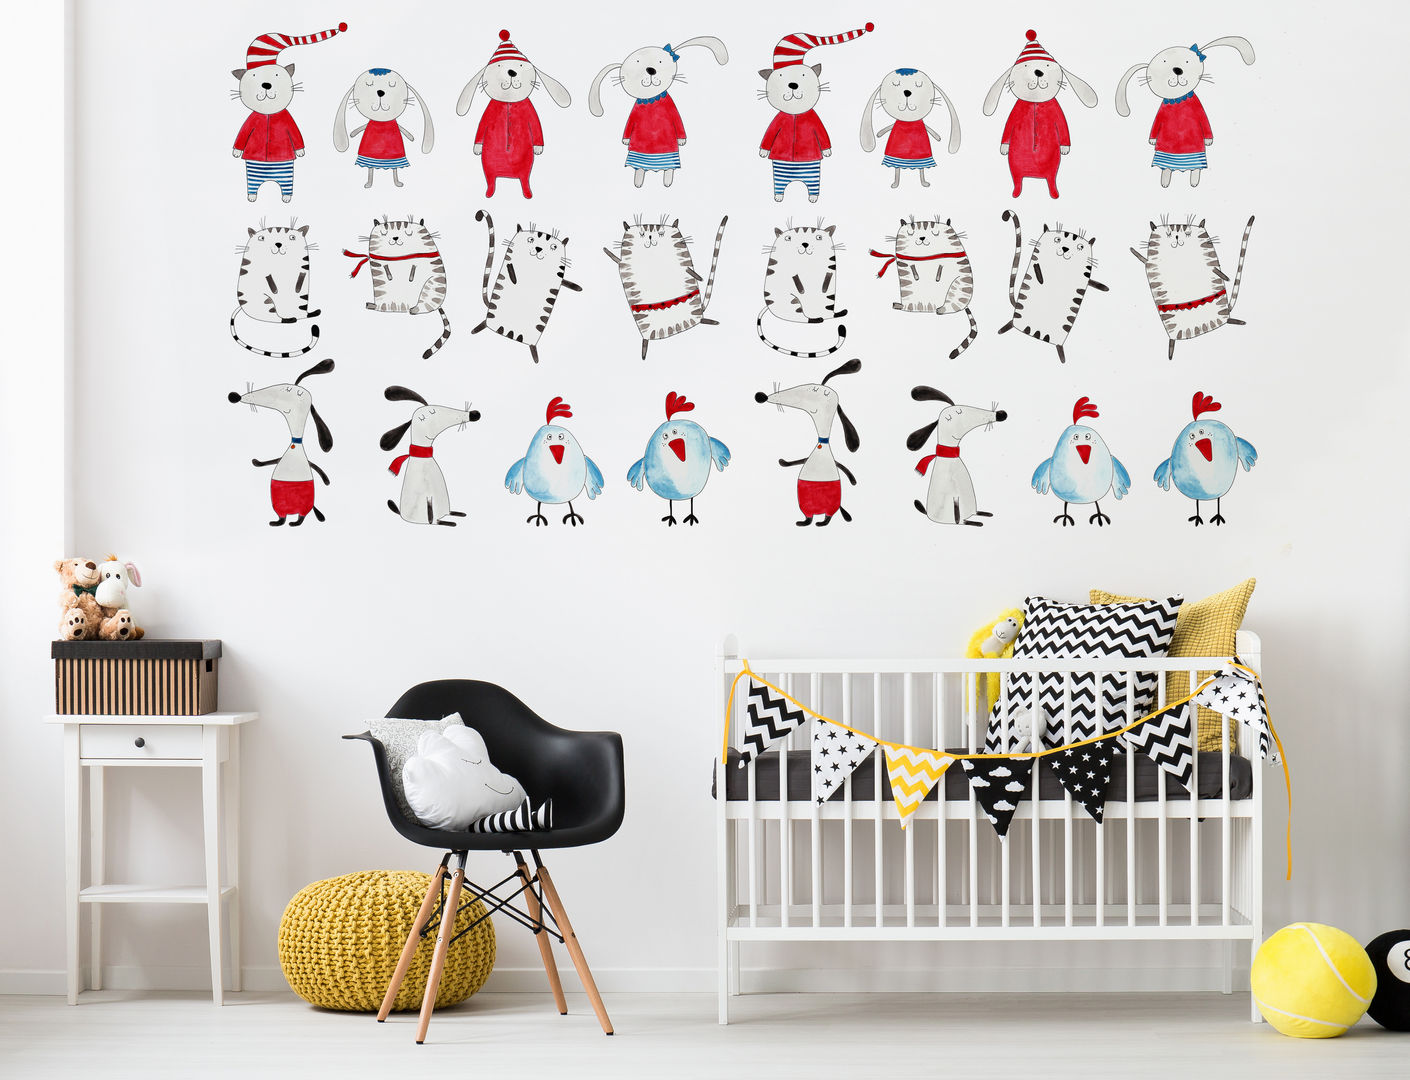 Little Friends Pixers Nursery/kid’s room wall mural,wallpaper,kid,child,animals,drawing